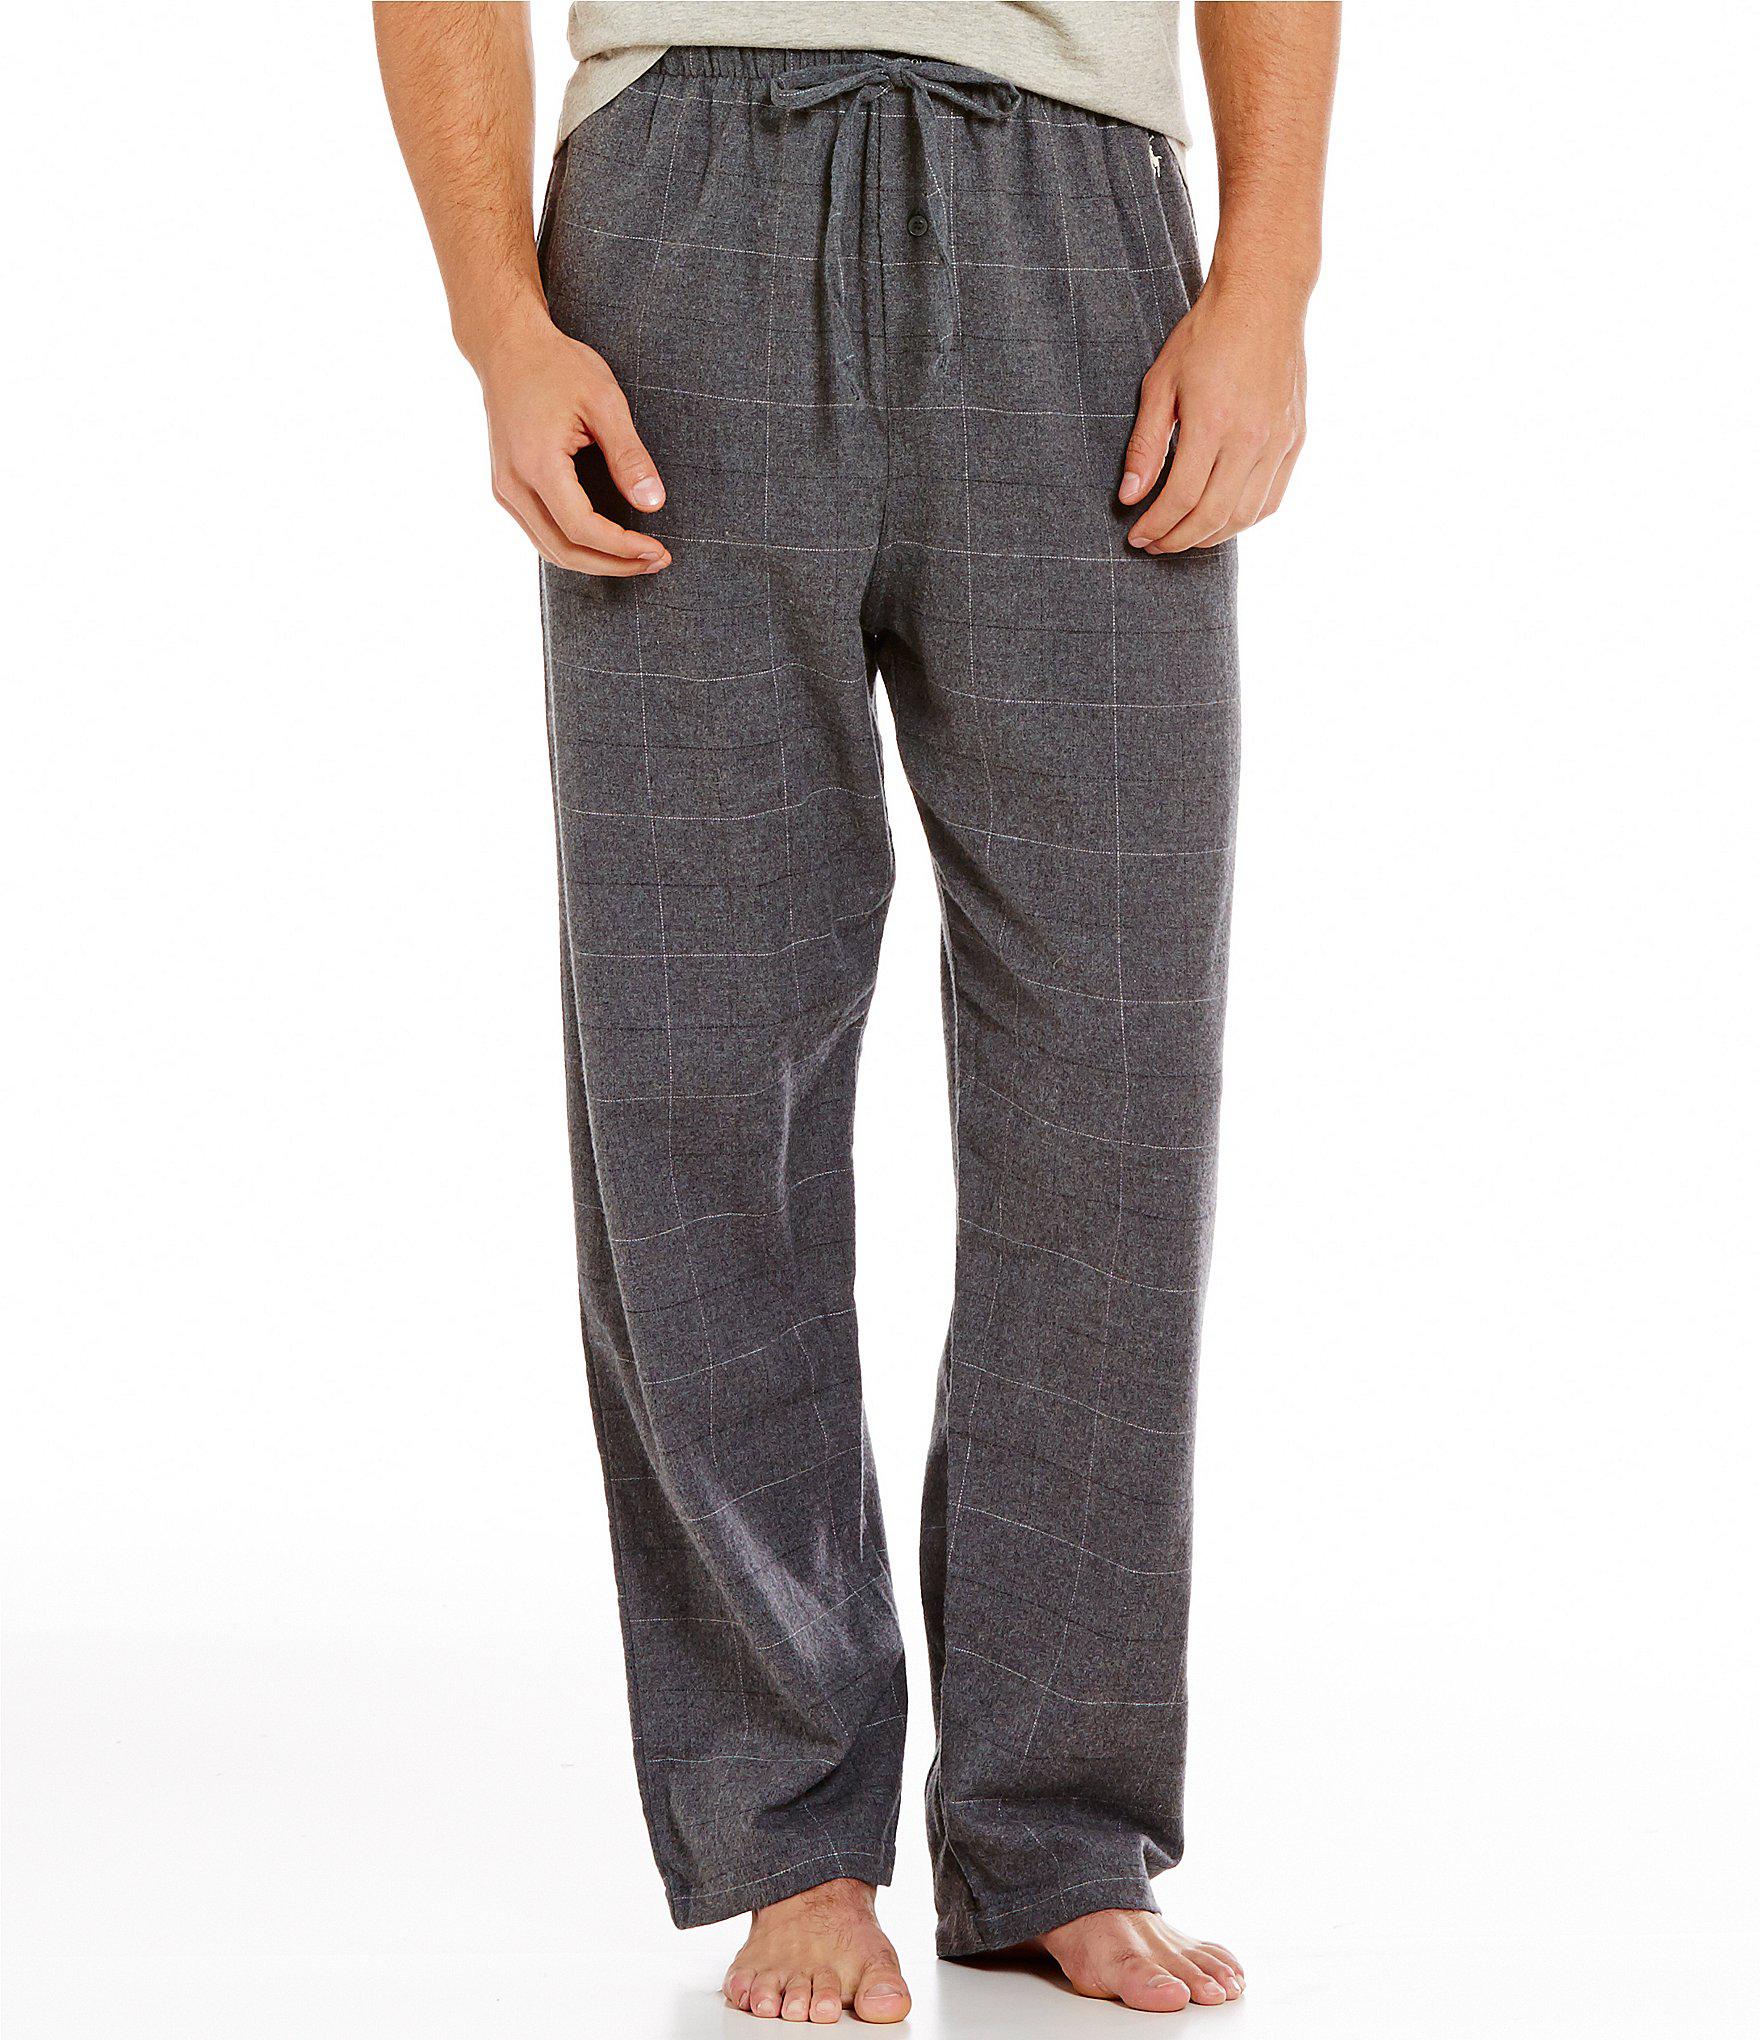 Lyst - Polo Ralph Lauren Flannel Windowpane Pajama Pants in Gray for Men